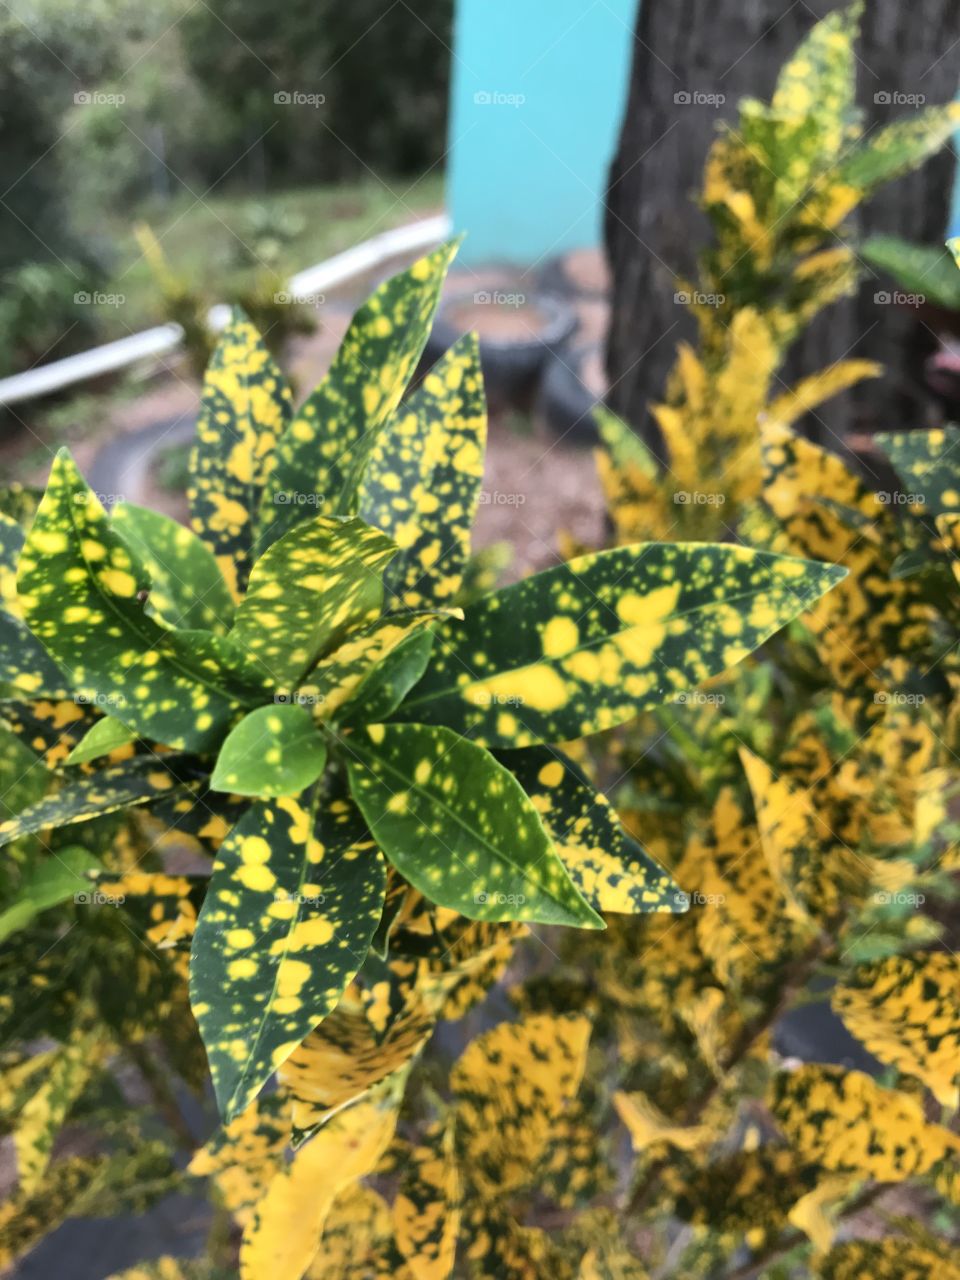 Speckled, crisp, green and bitter yellow plant in Honduras garden. 